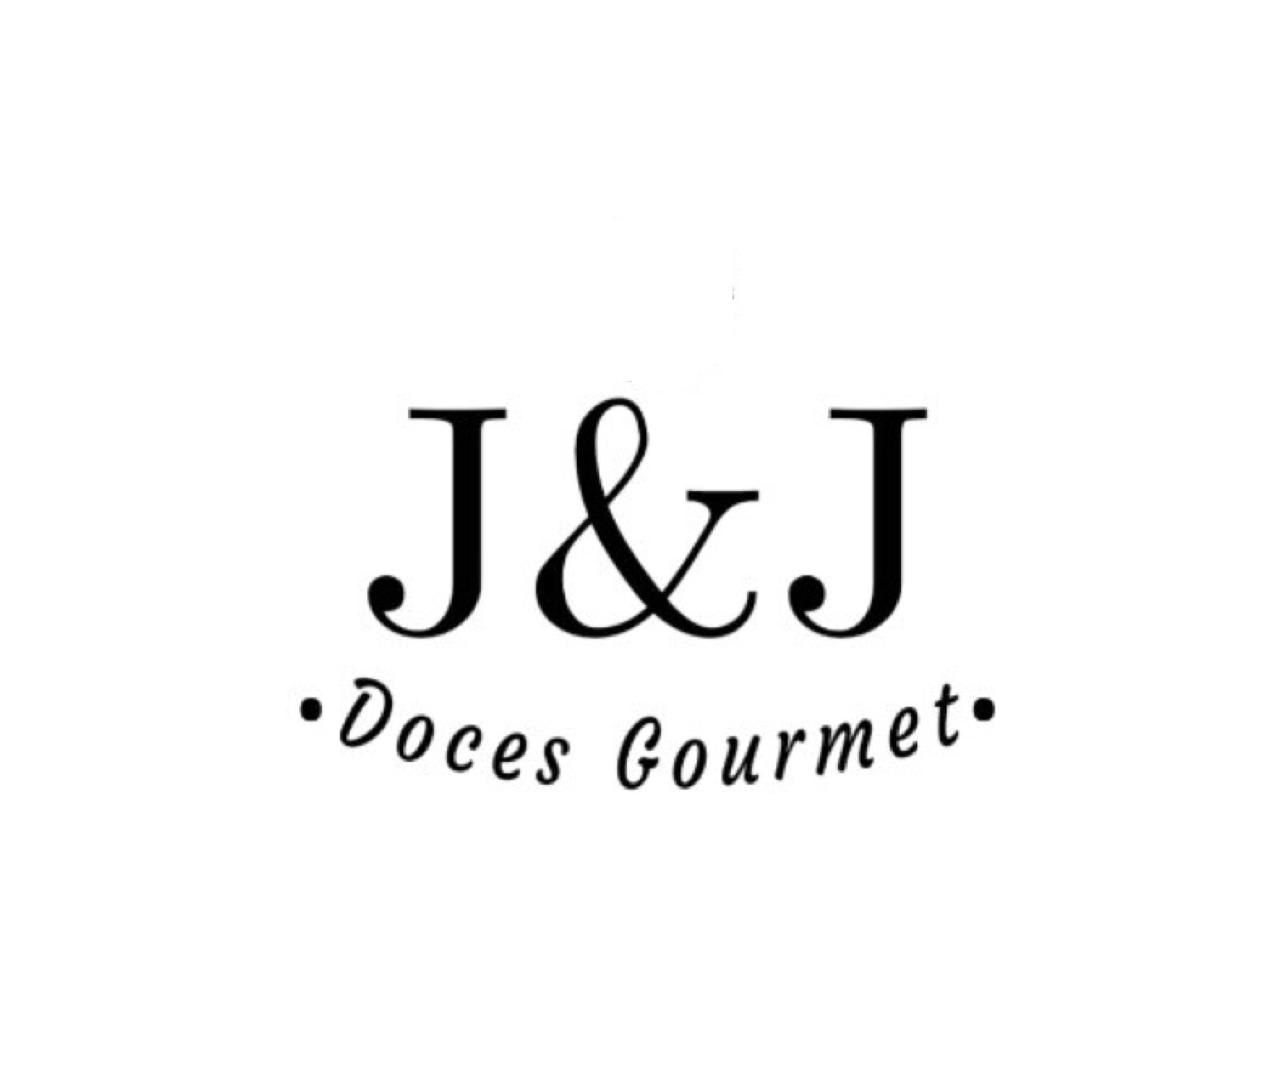 J & J Doces Gourmet